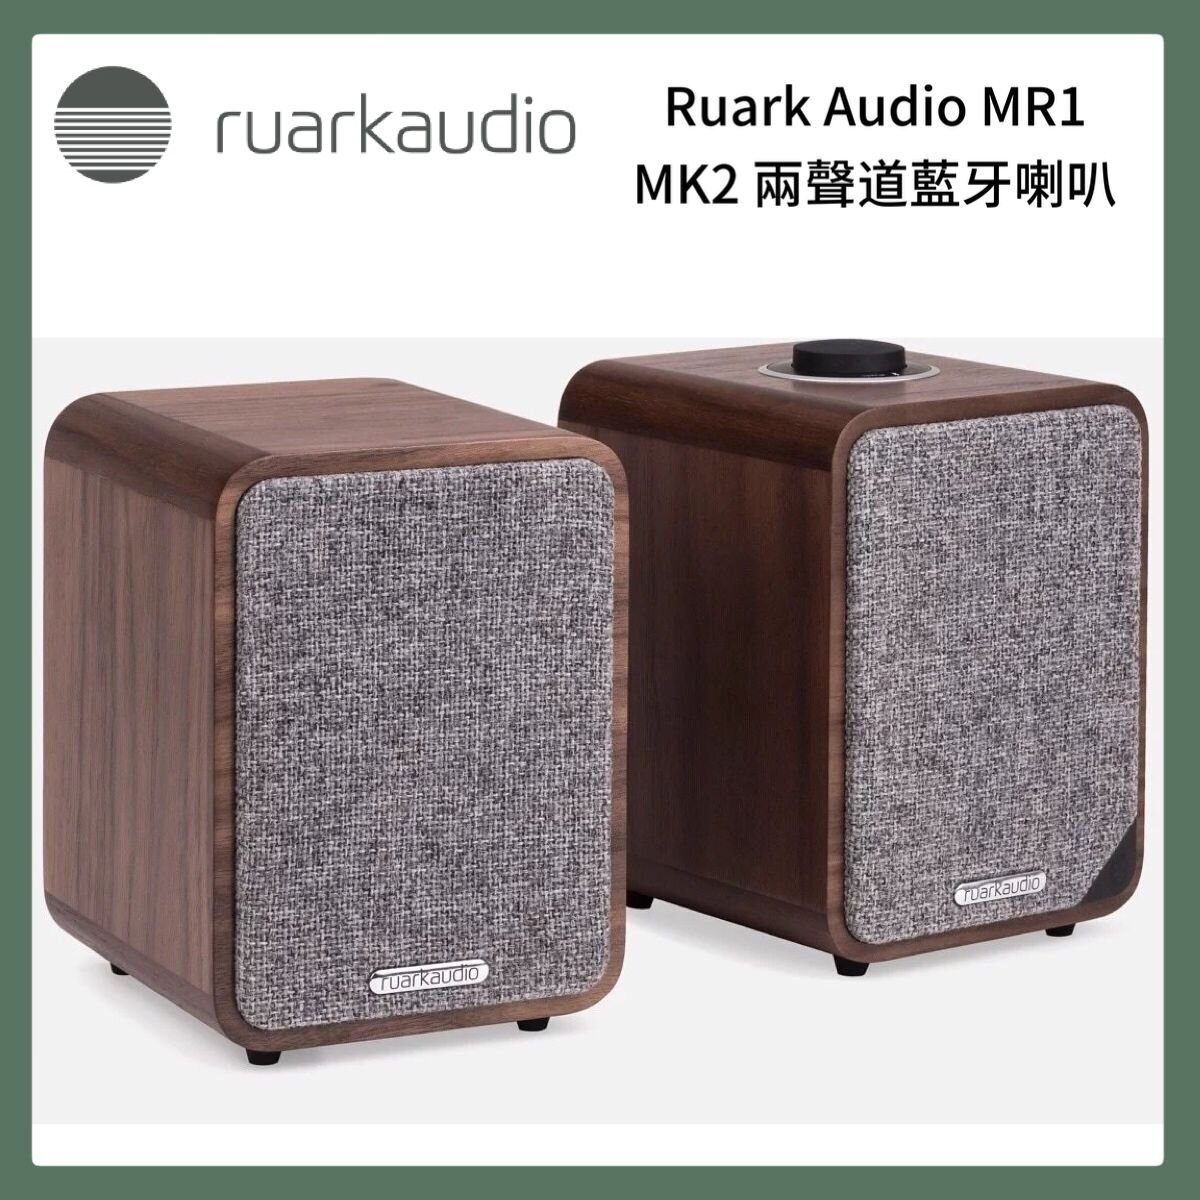 Ruarkaudio | Ruark Audio MR1 MK2 兩聲道藍牙喇叭胡桃木色(一對